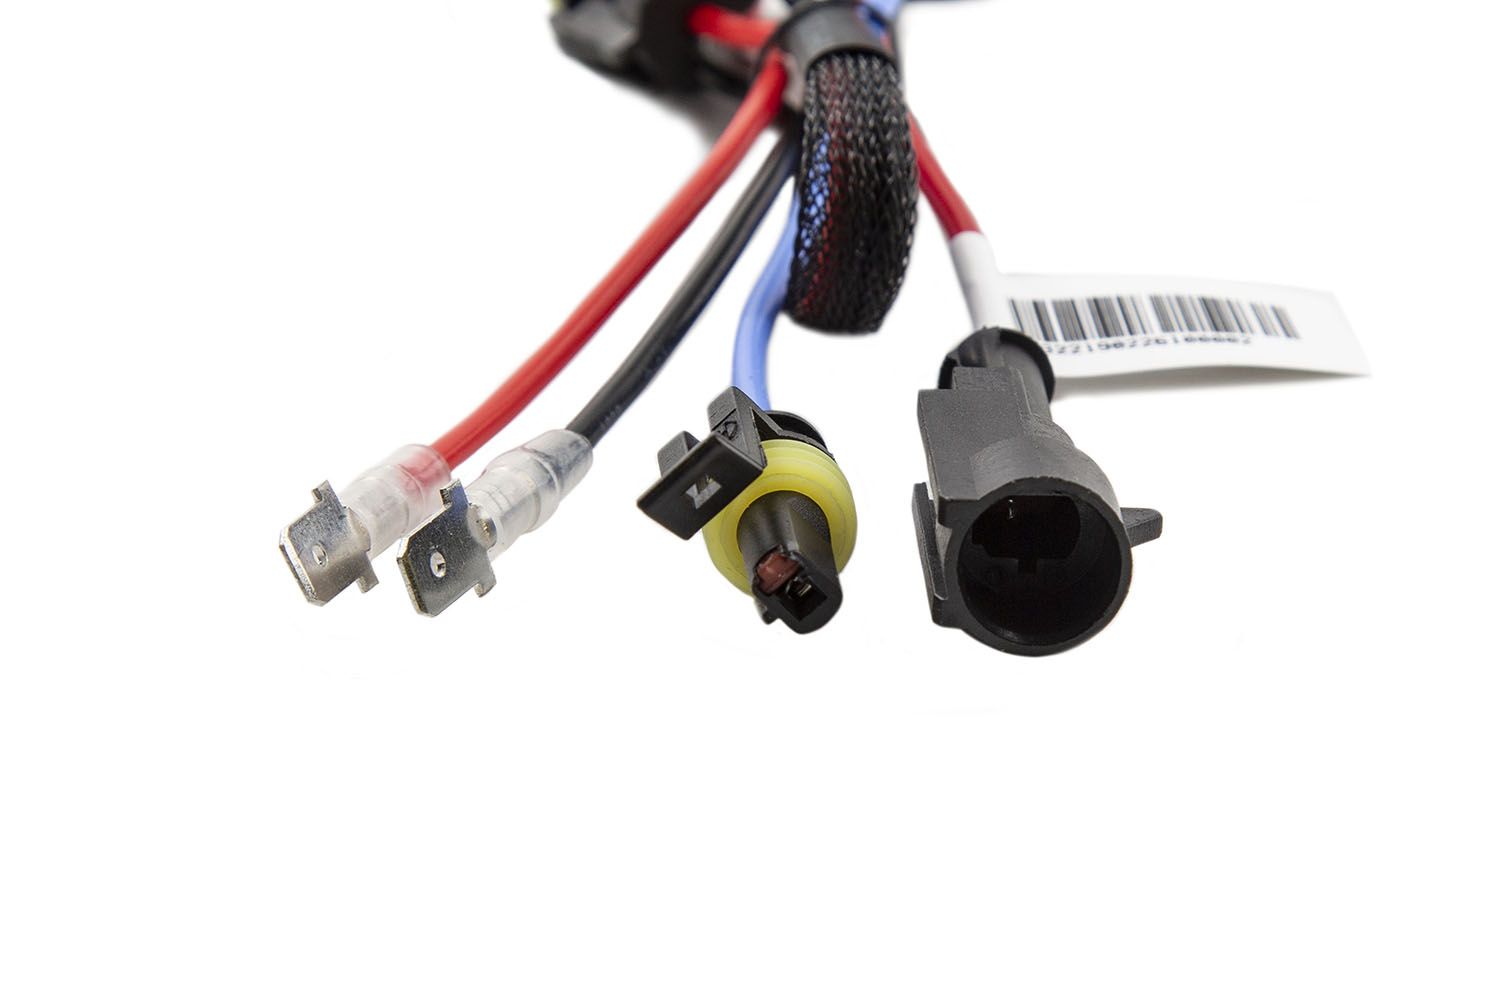 D2H Xenon HID bulbs D2S base with AMP connectors